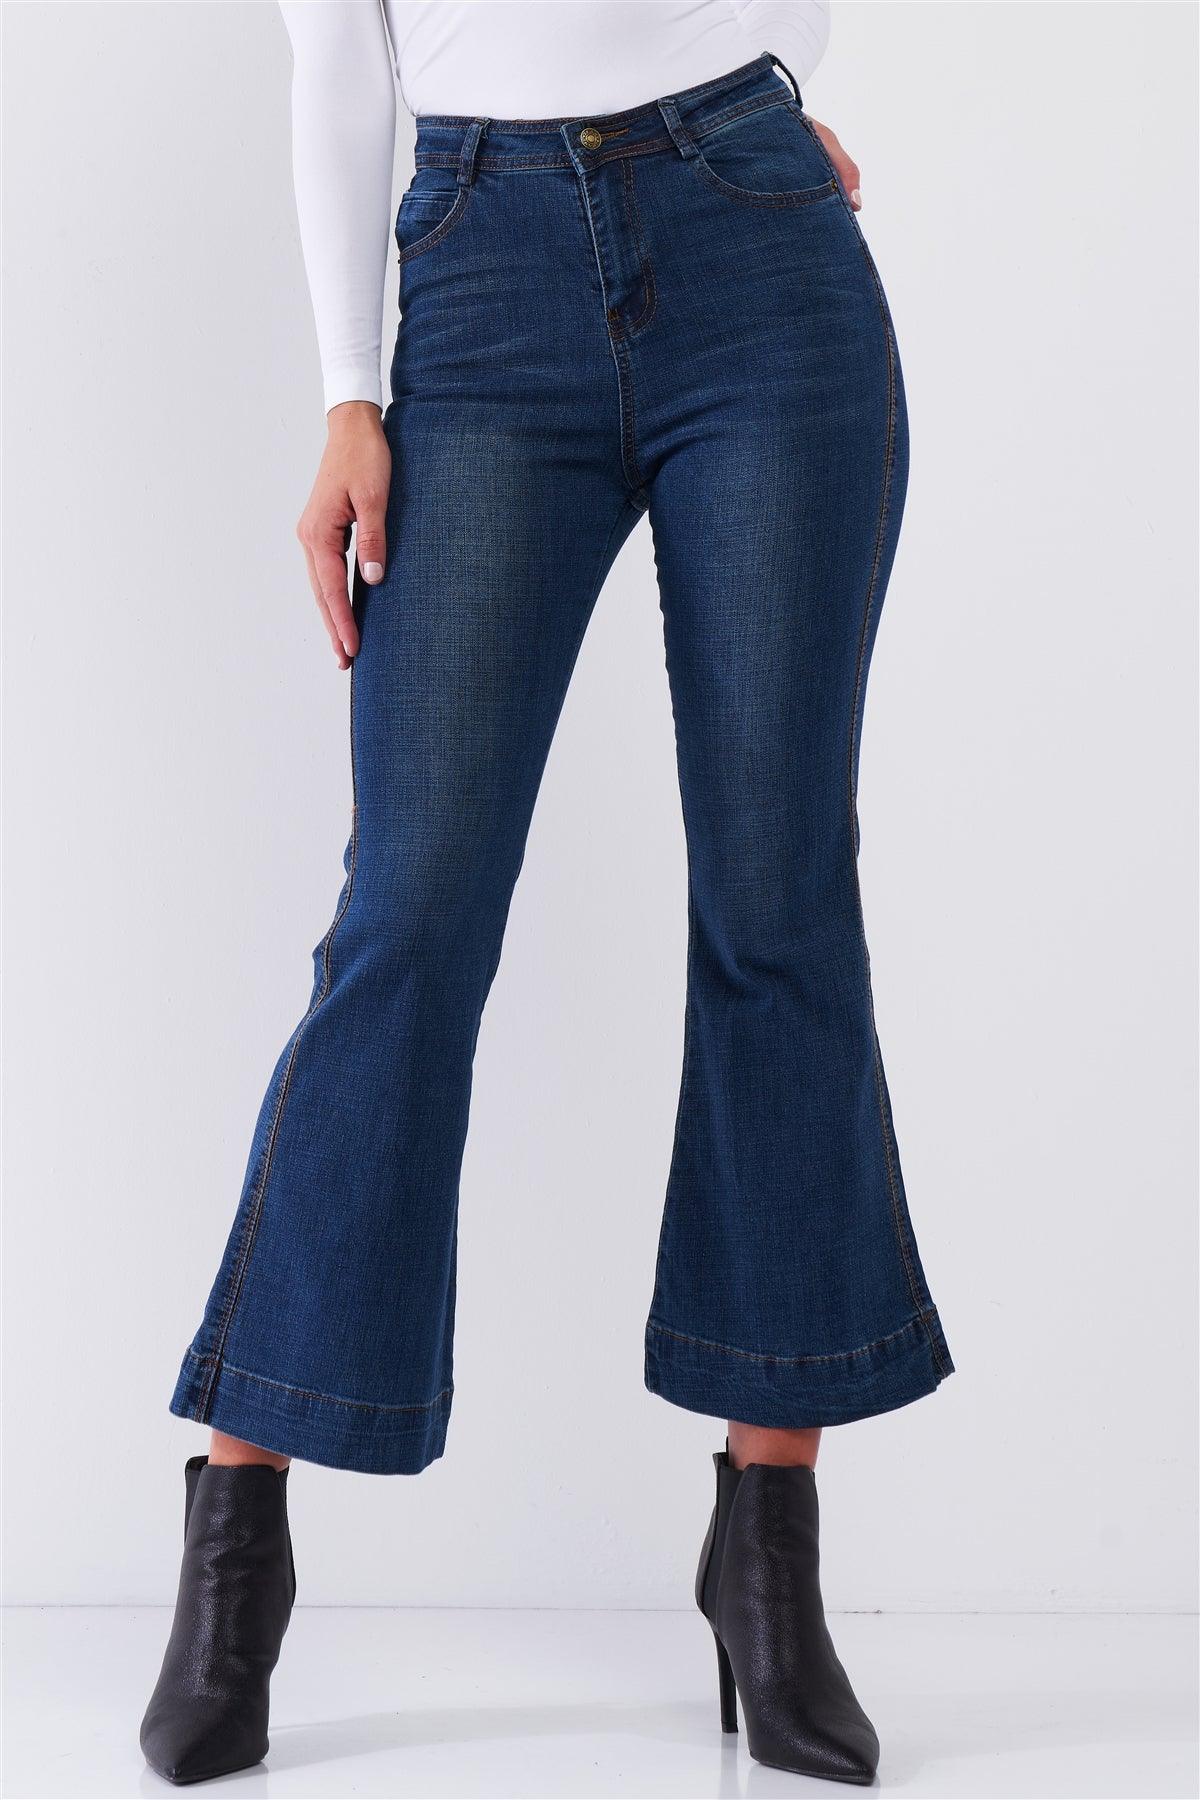 Blue Denim High Waisted Ankle Length Bell Bottom Flare Jeans